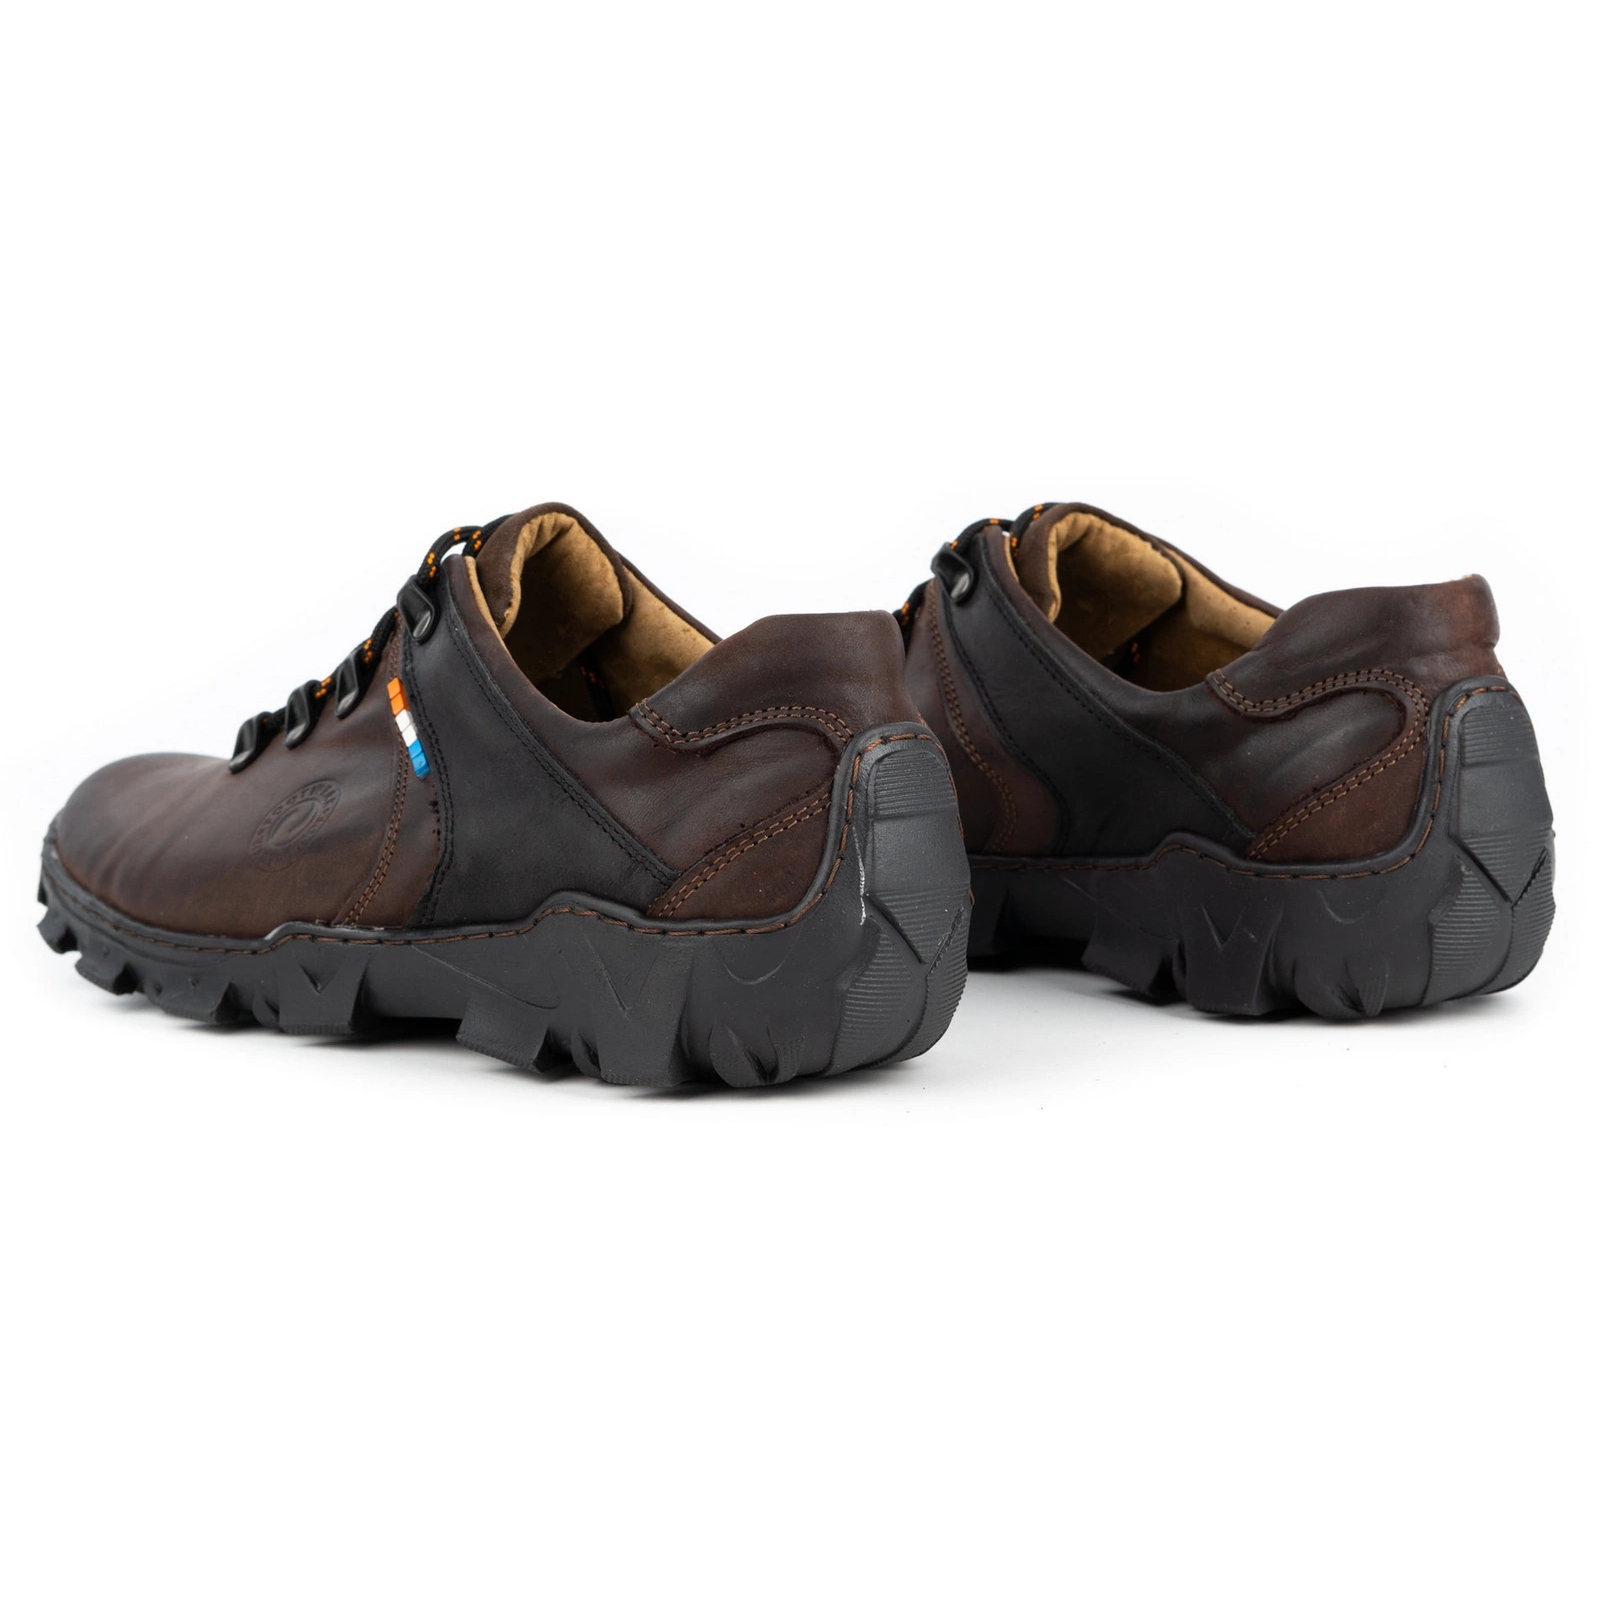 Zapatos trekking hombre DK marrón - KeeShoes